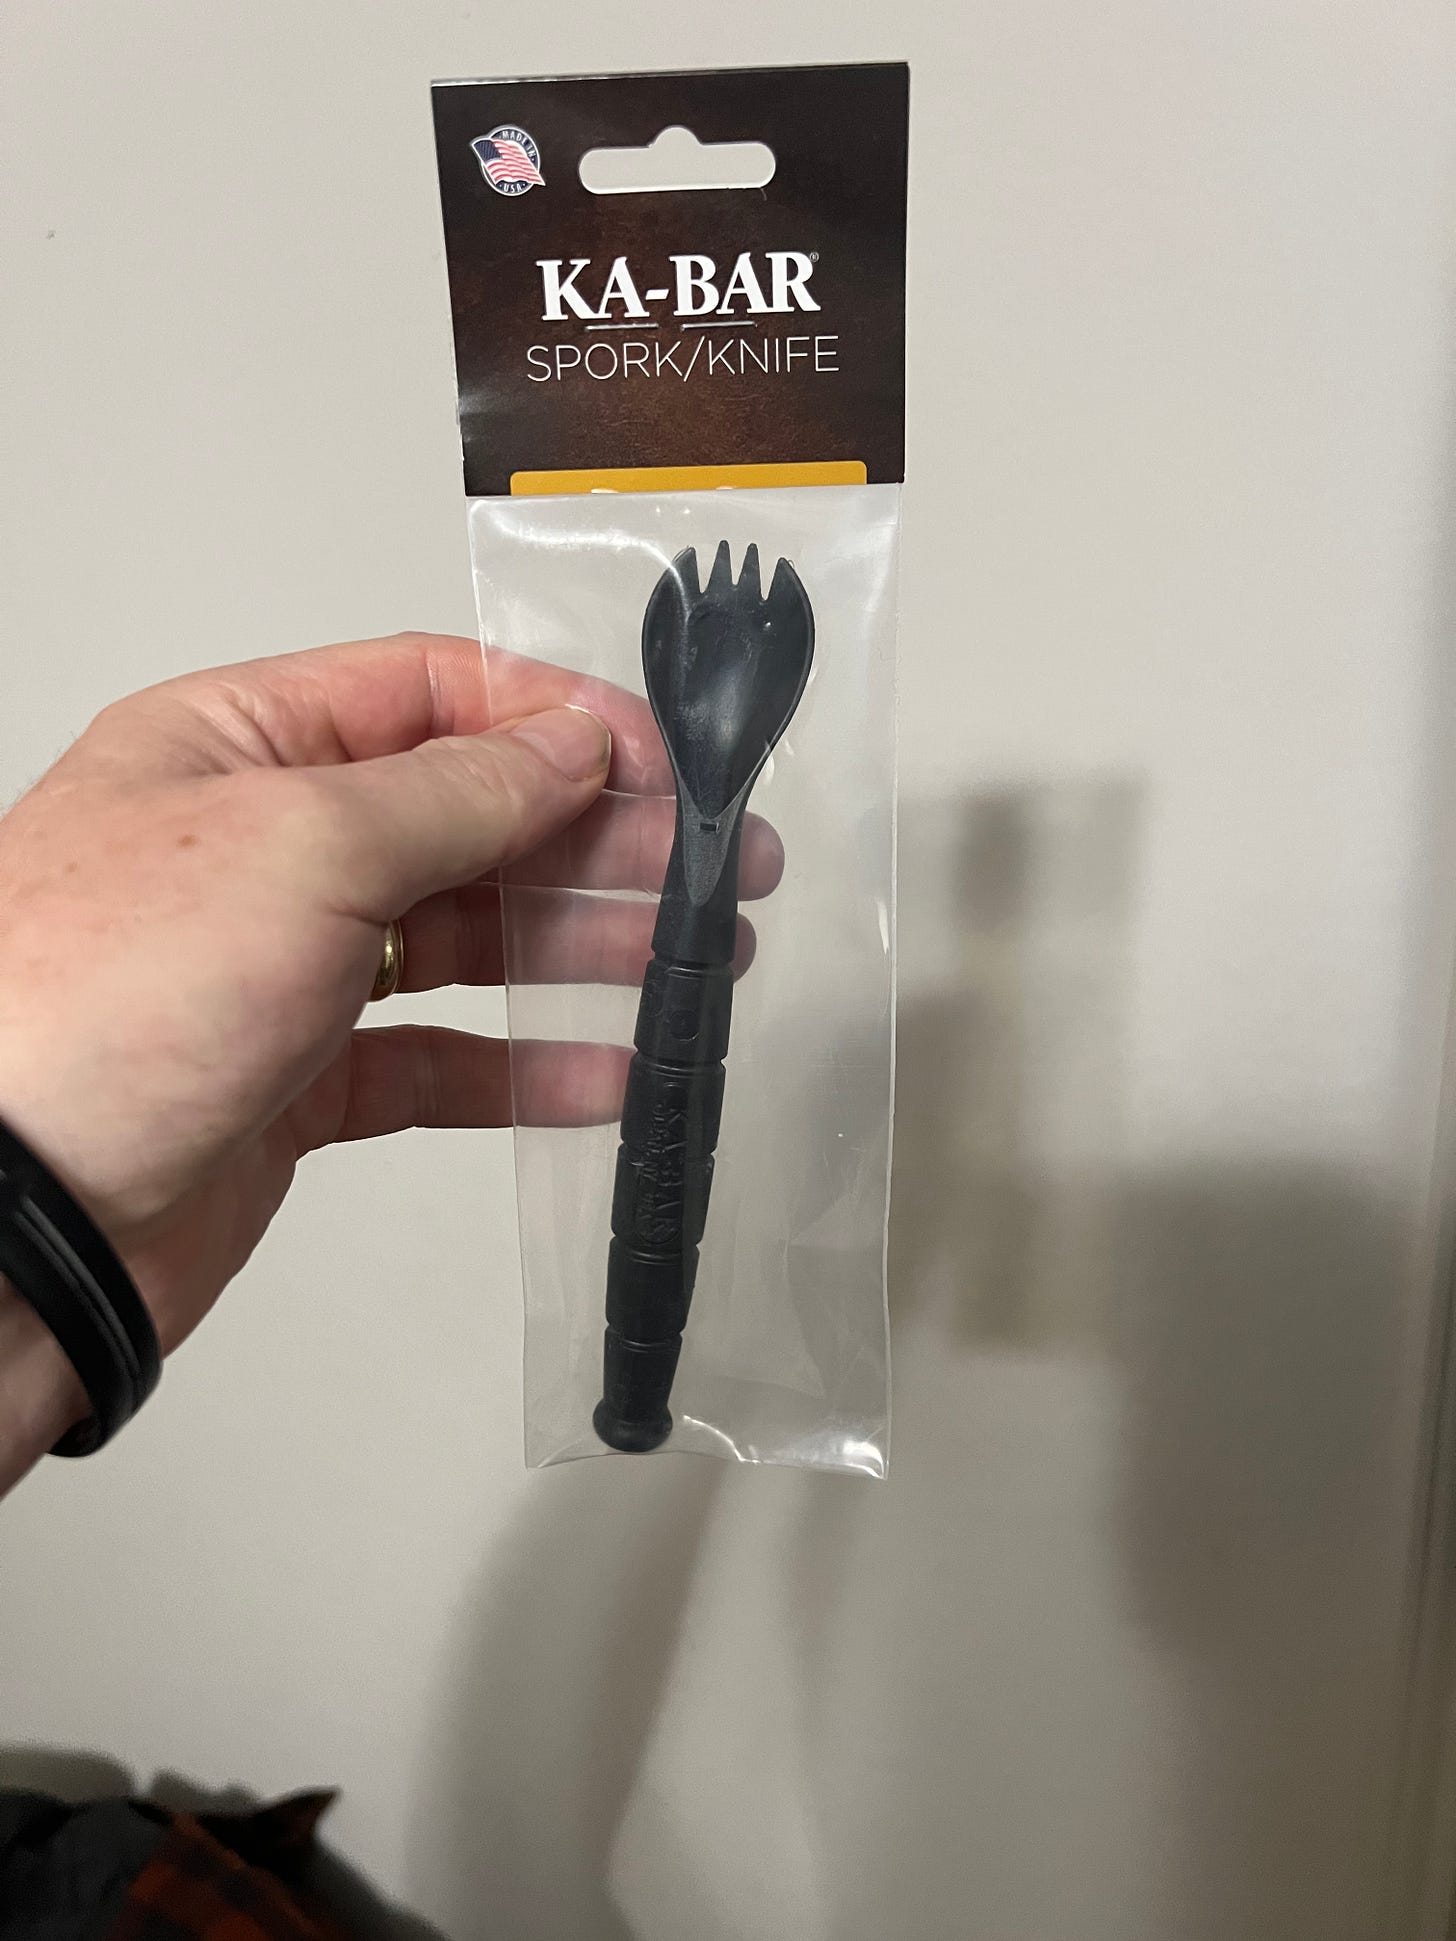 Ka-Bar tactical spork in package